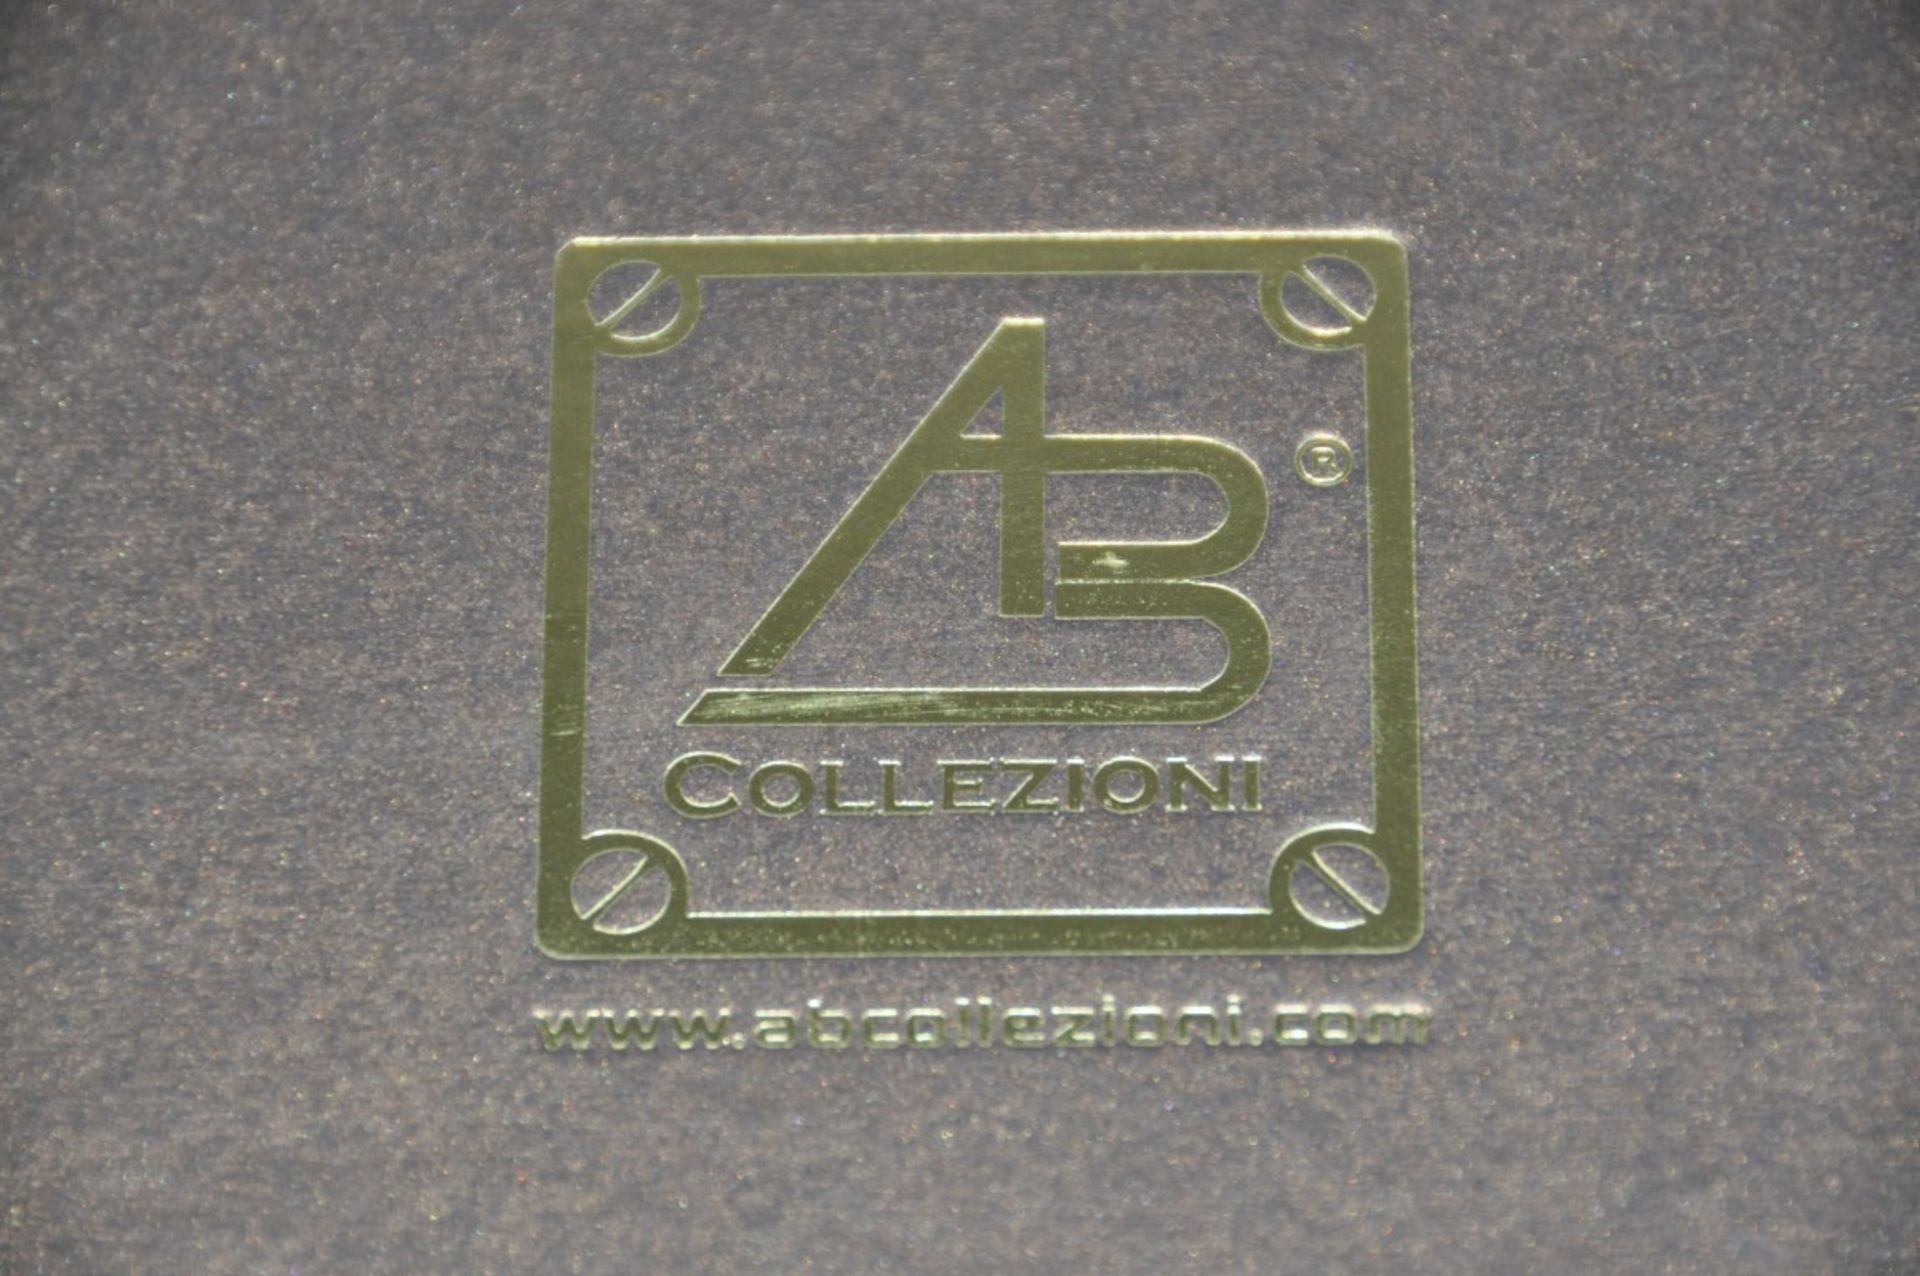 1 x "AB Collezioni" Italian Genuine Leather-Bound Luxury POKER SET (34048) - Ref LT003 - Features - Image 8 of 8